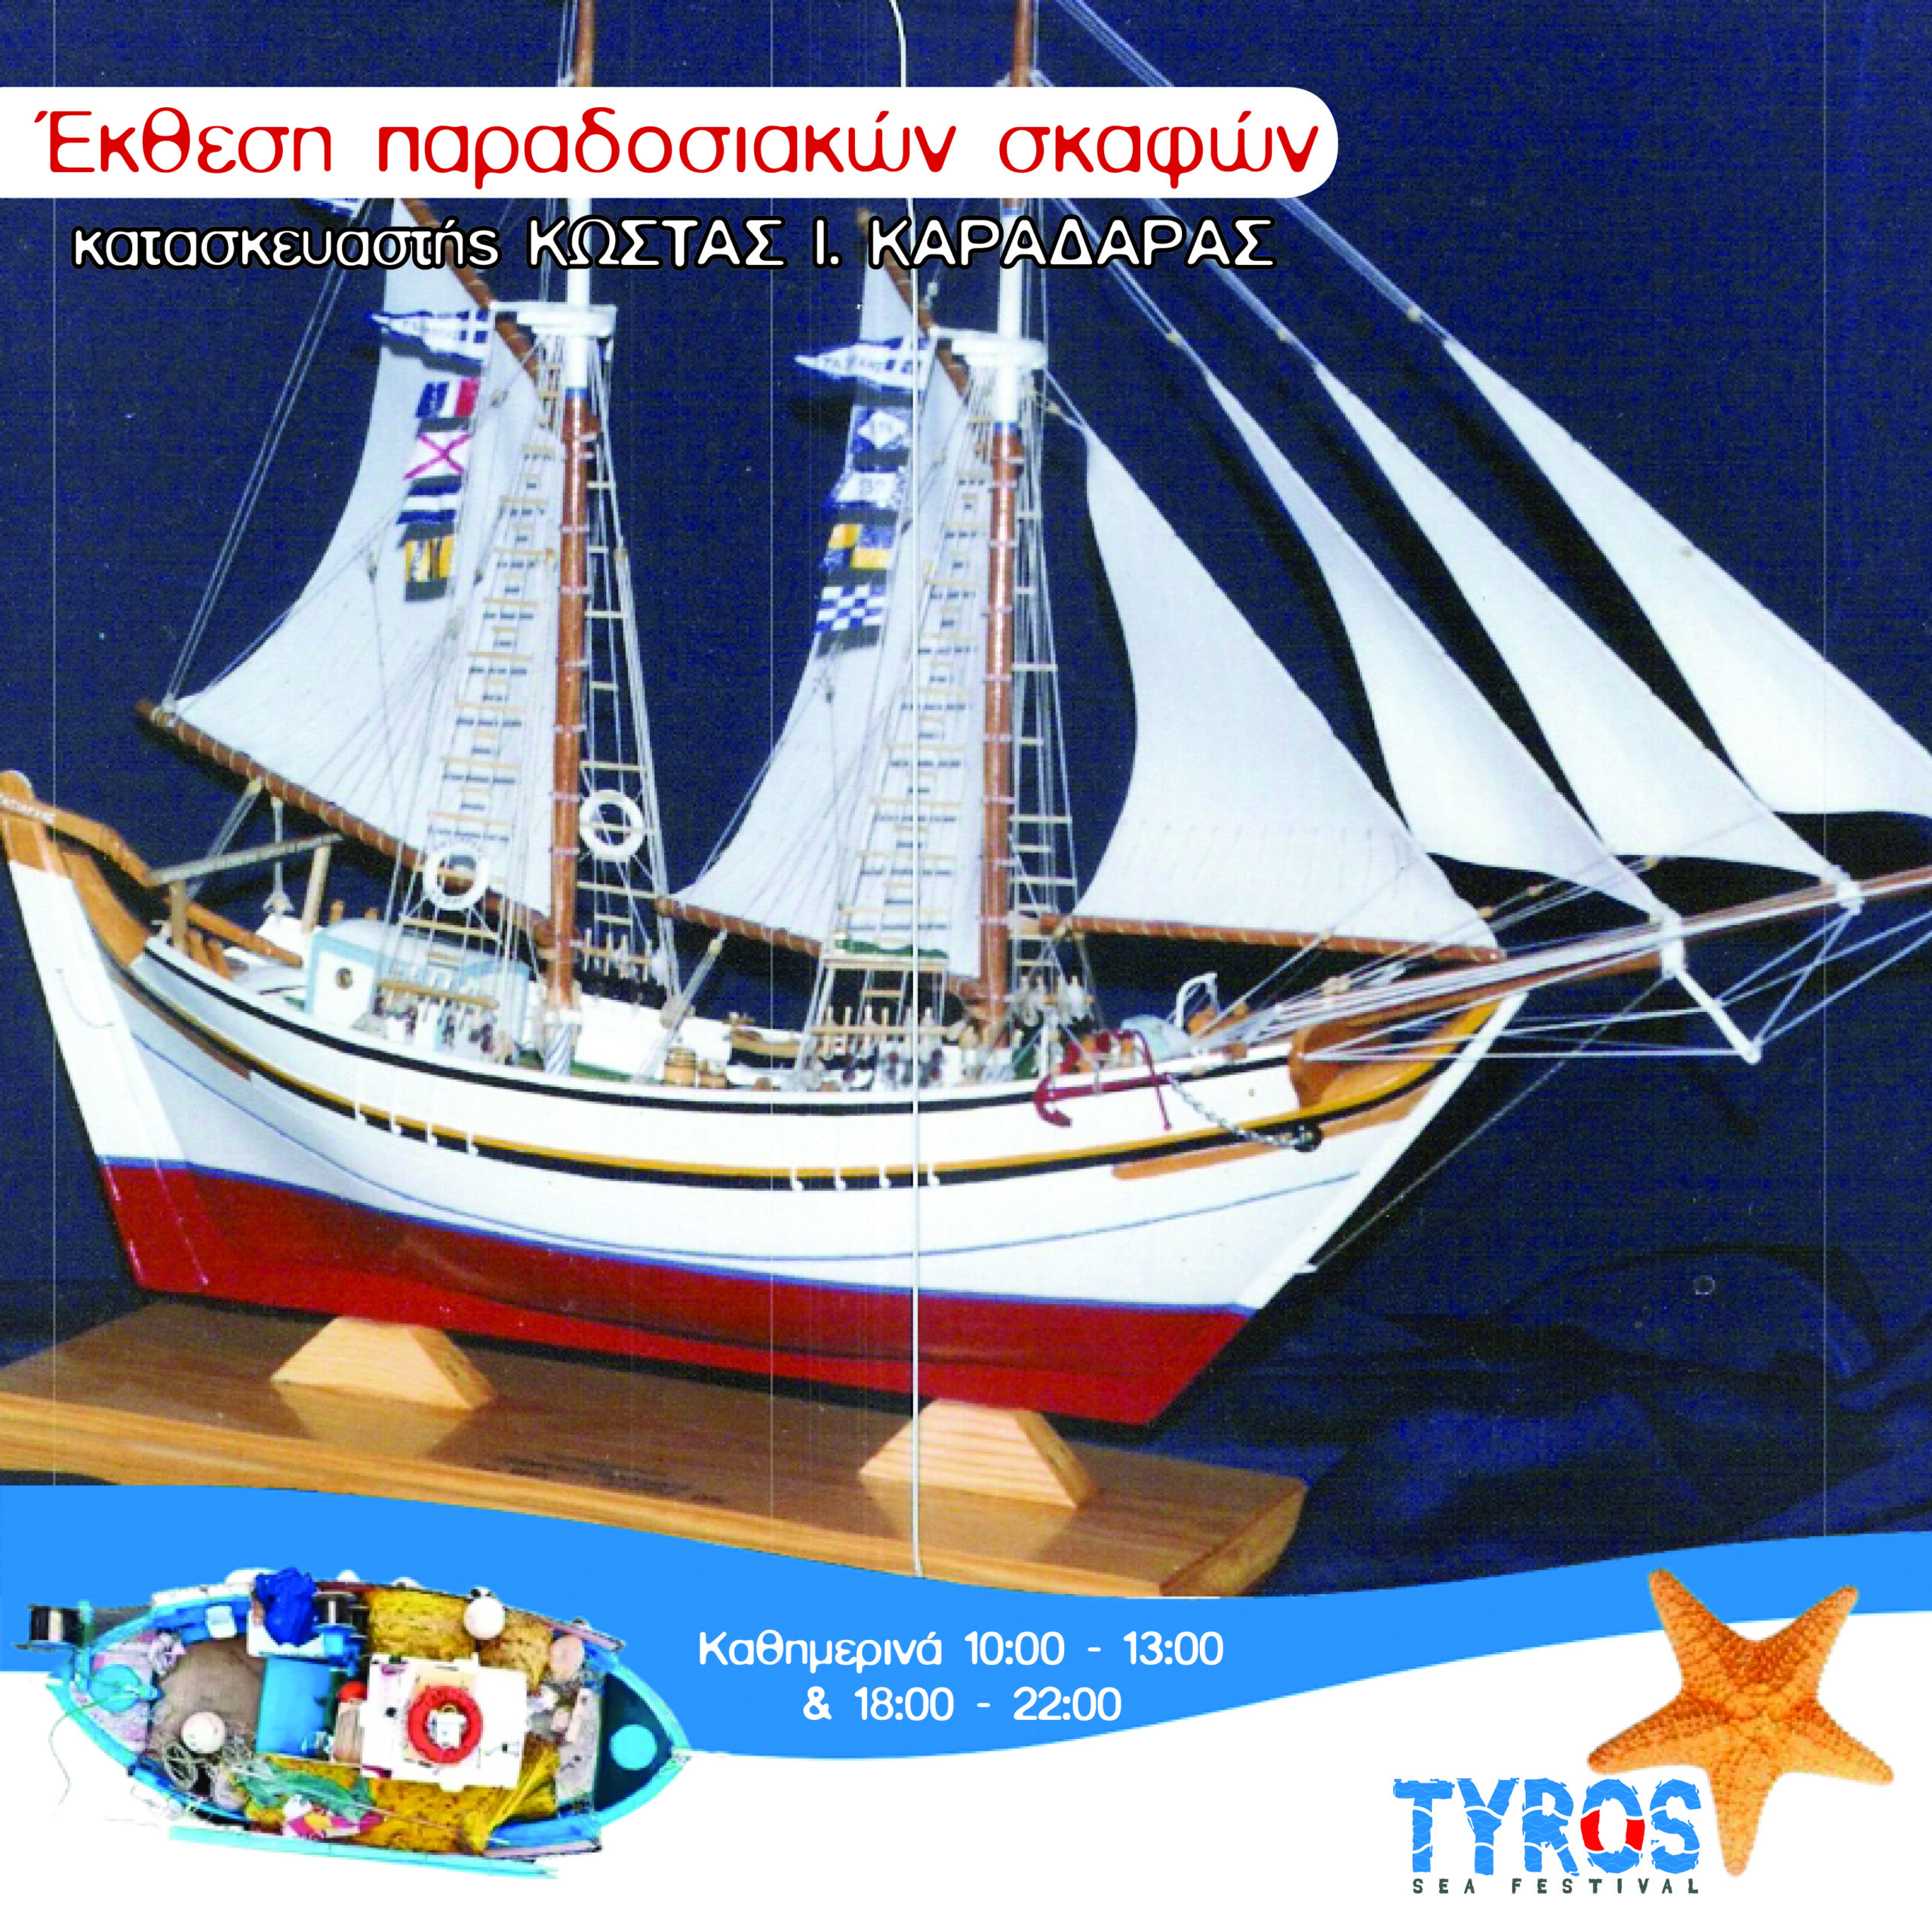 Tyros Sea Festival